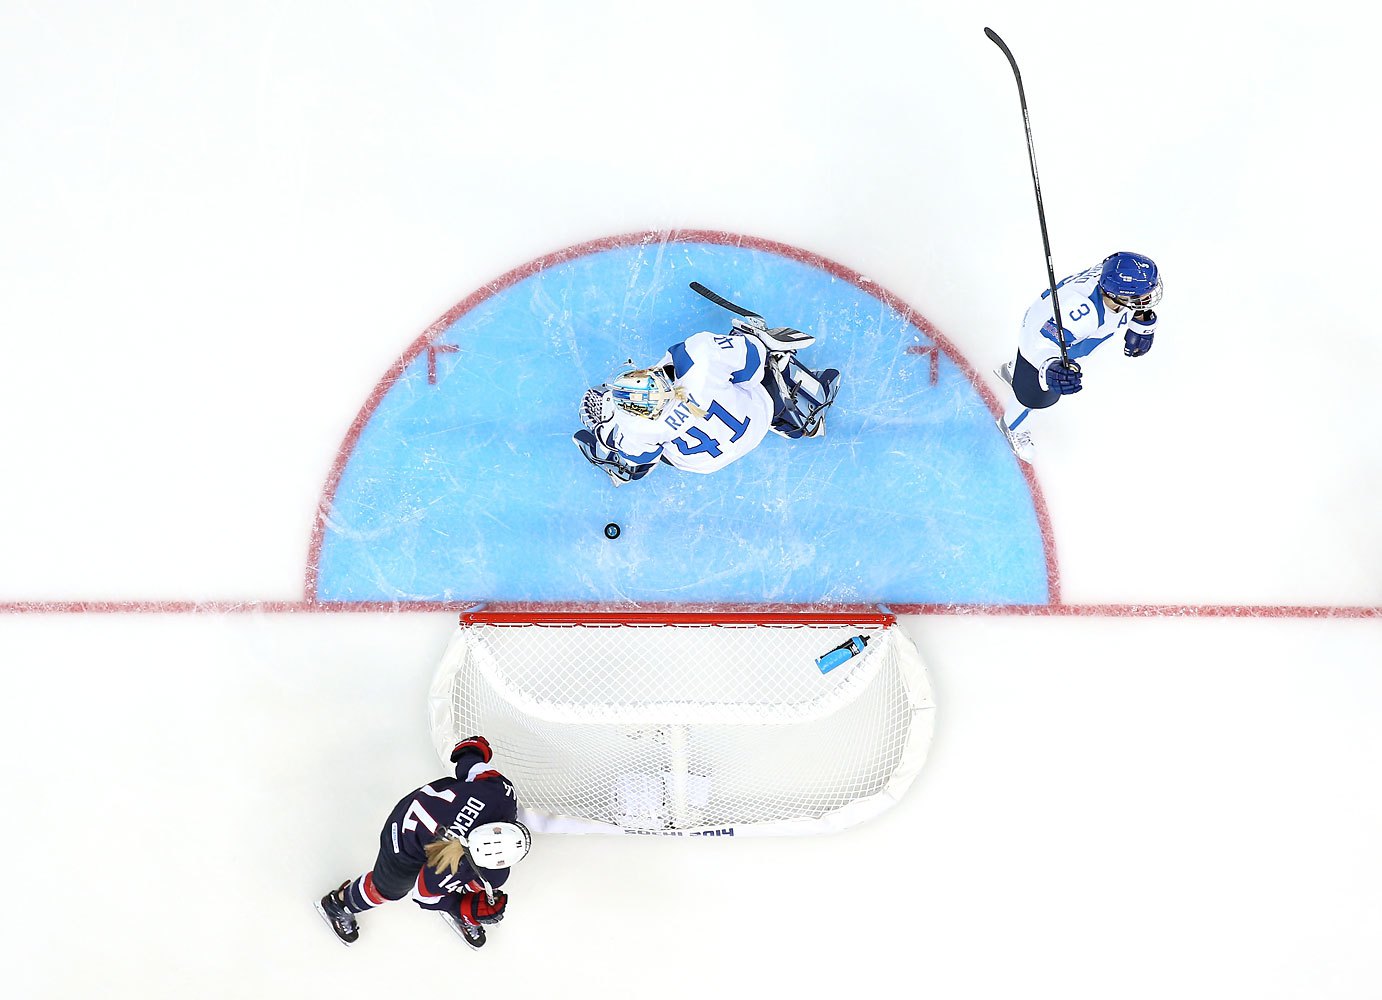 Women's Ice Hockey - United States vs Finland